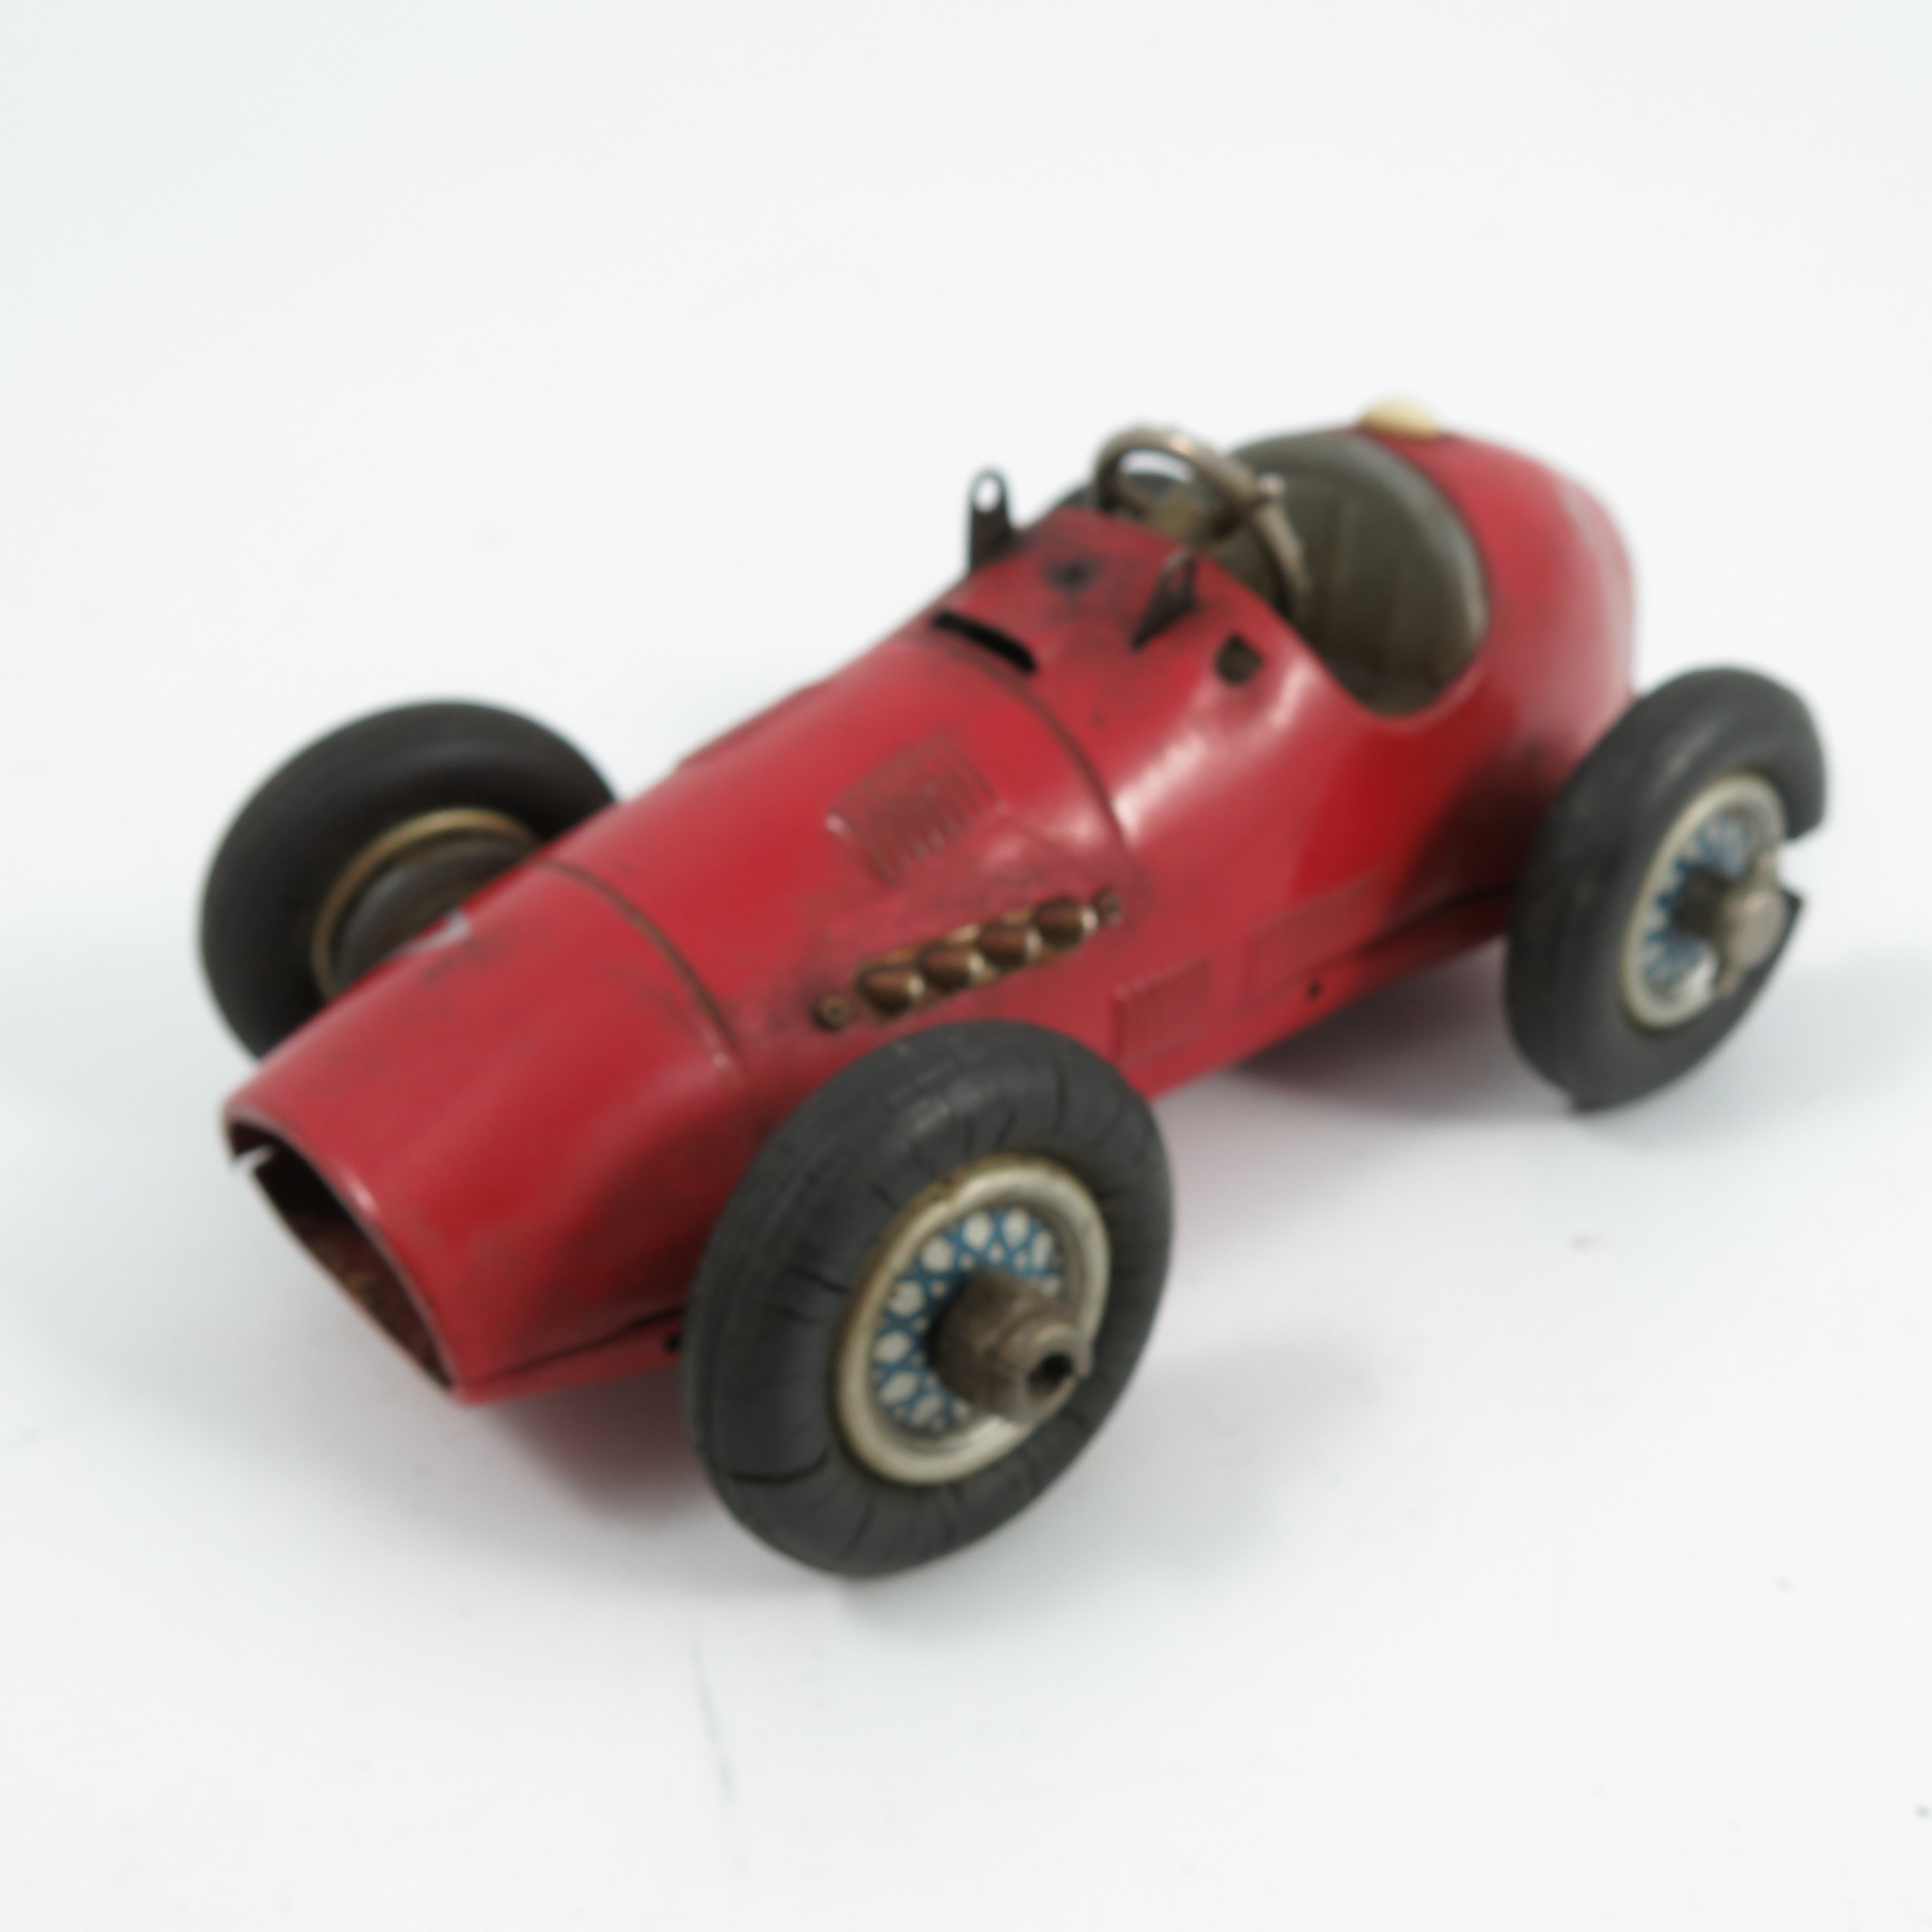 A Schuco Grand Prix Racer, 1070 - Image 4 of 4